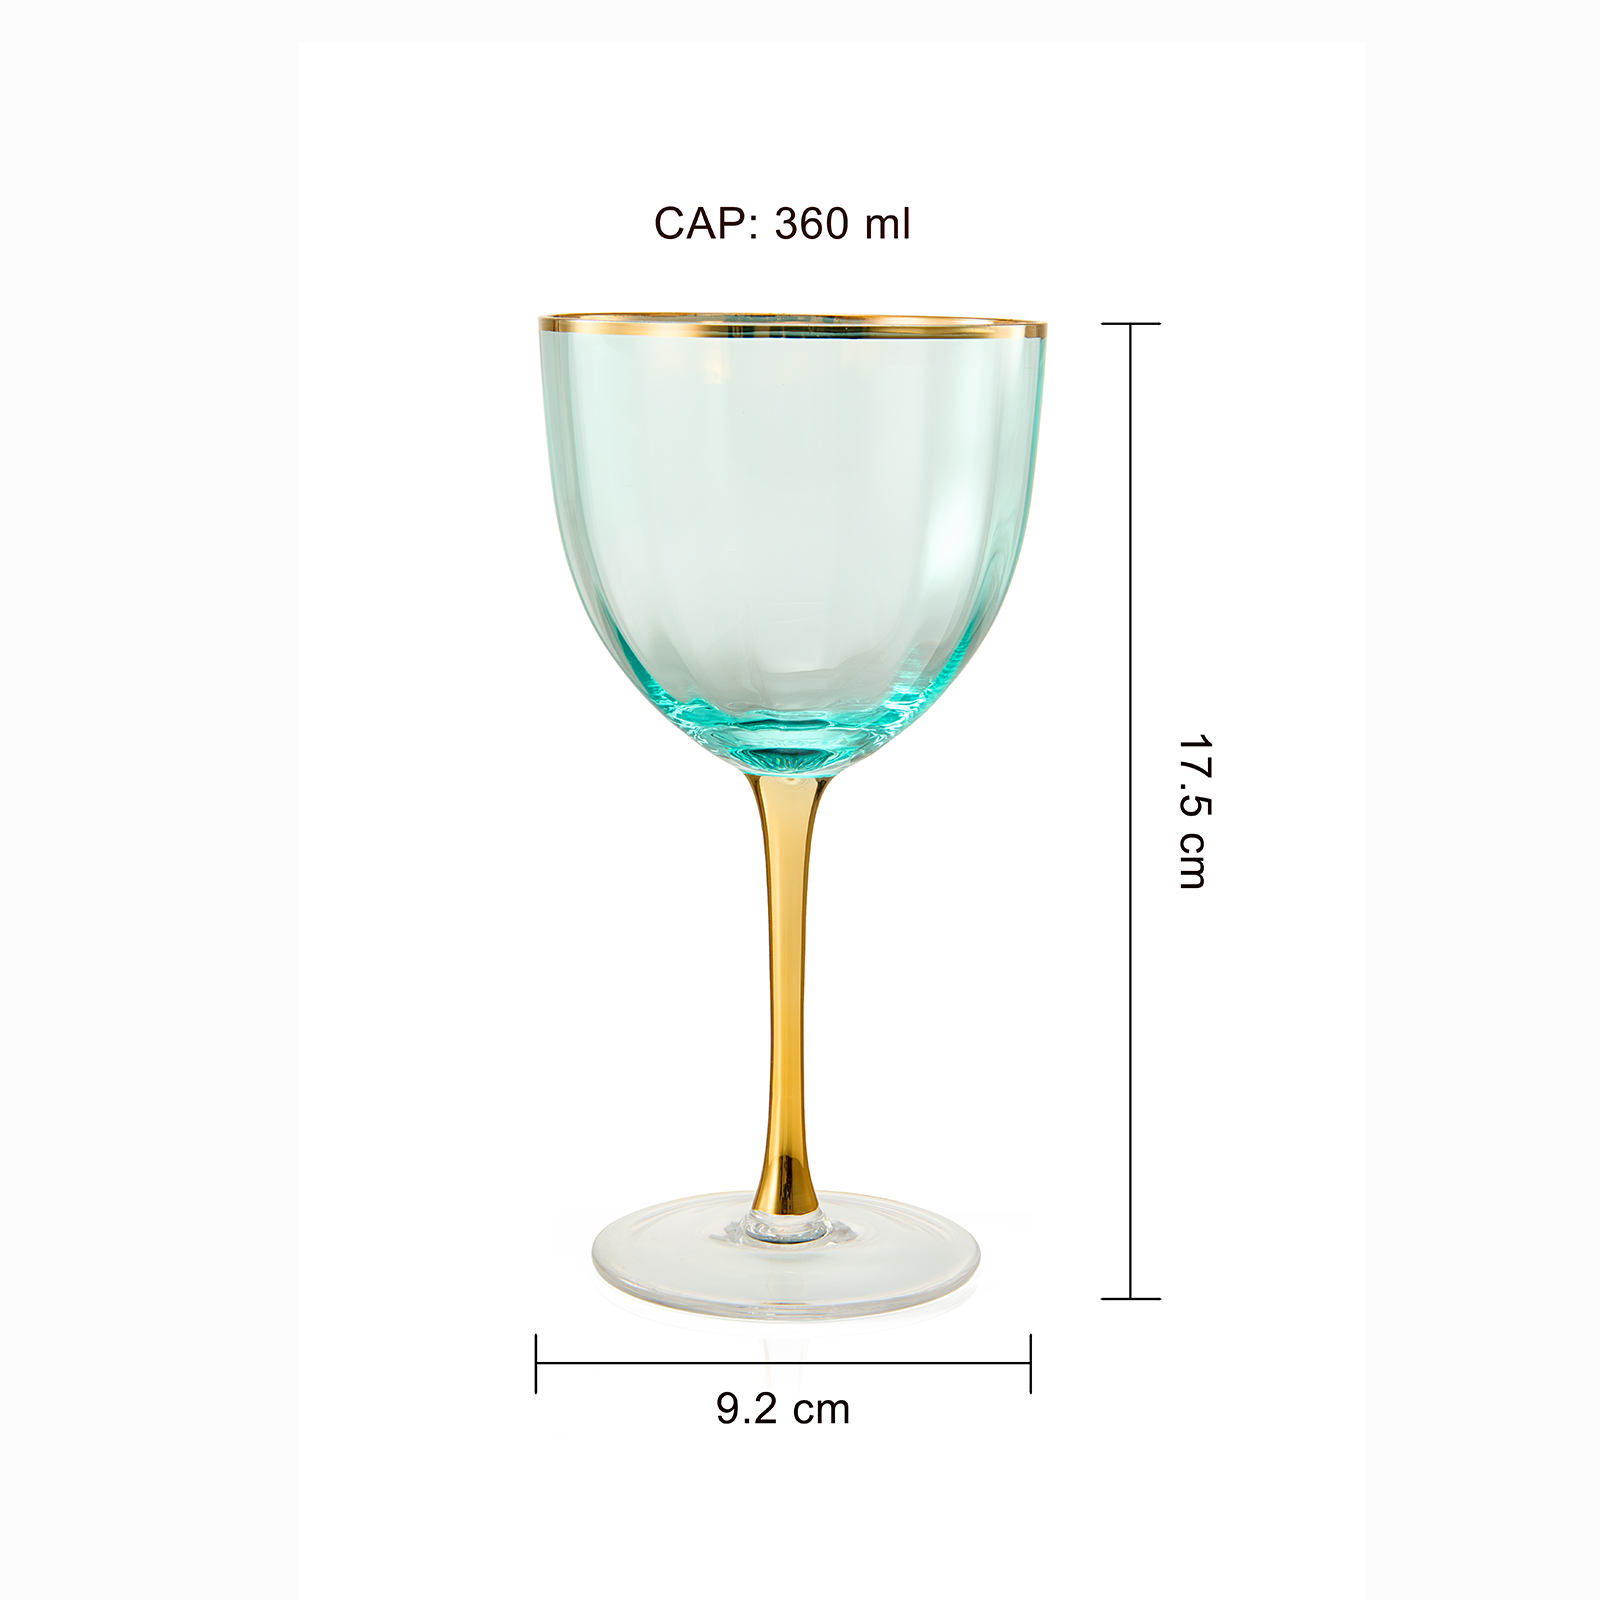 Elegant Stemless Wine Glass with Gold Rim - 18 oz Capacity